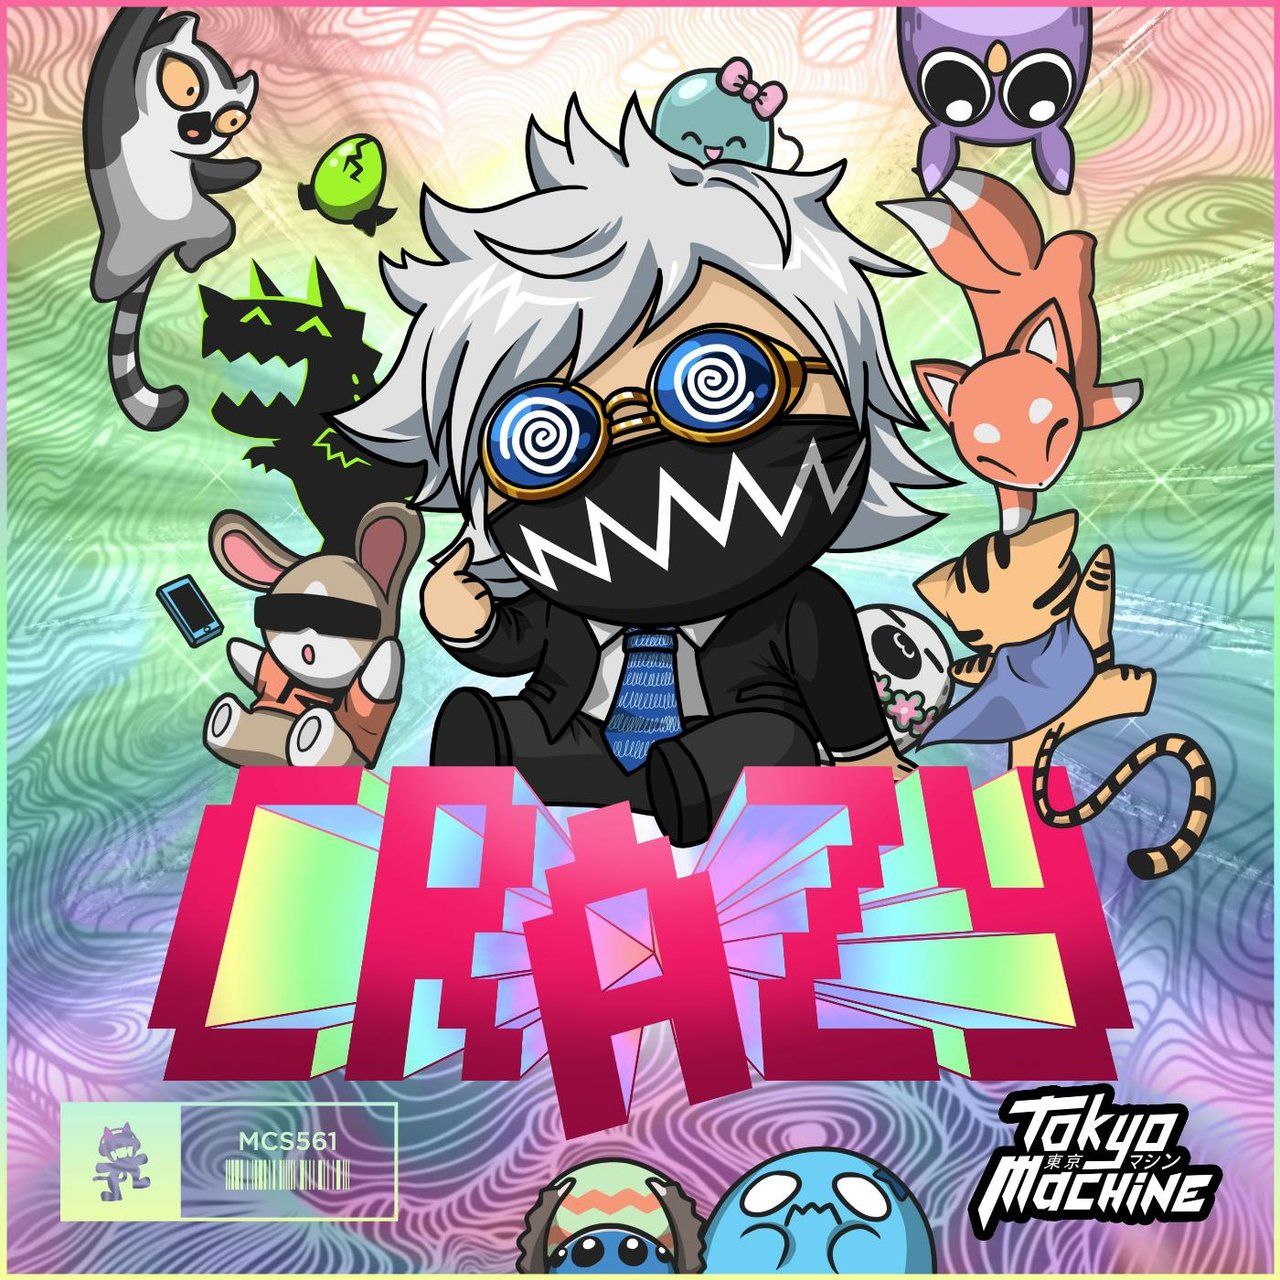 Tokyo Machine - CRAZY [Monstercat Release] (신남, 클럽, 격렬, 비트, 8비트)